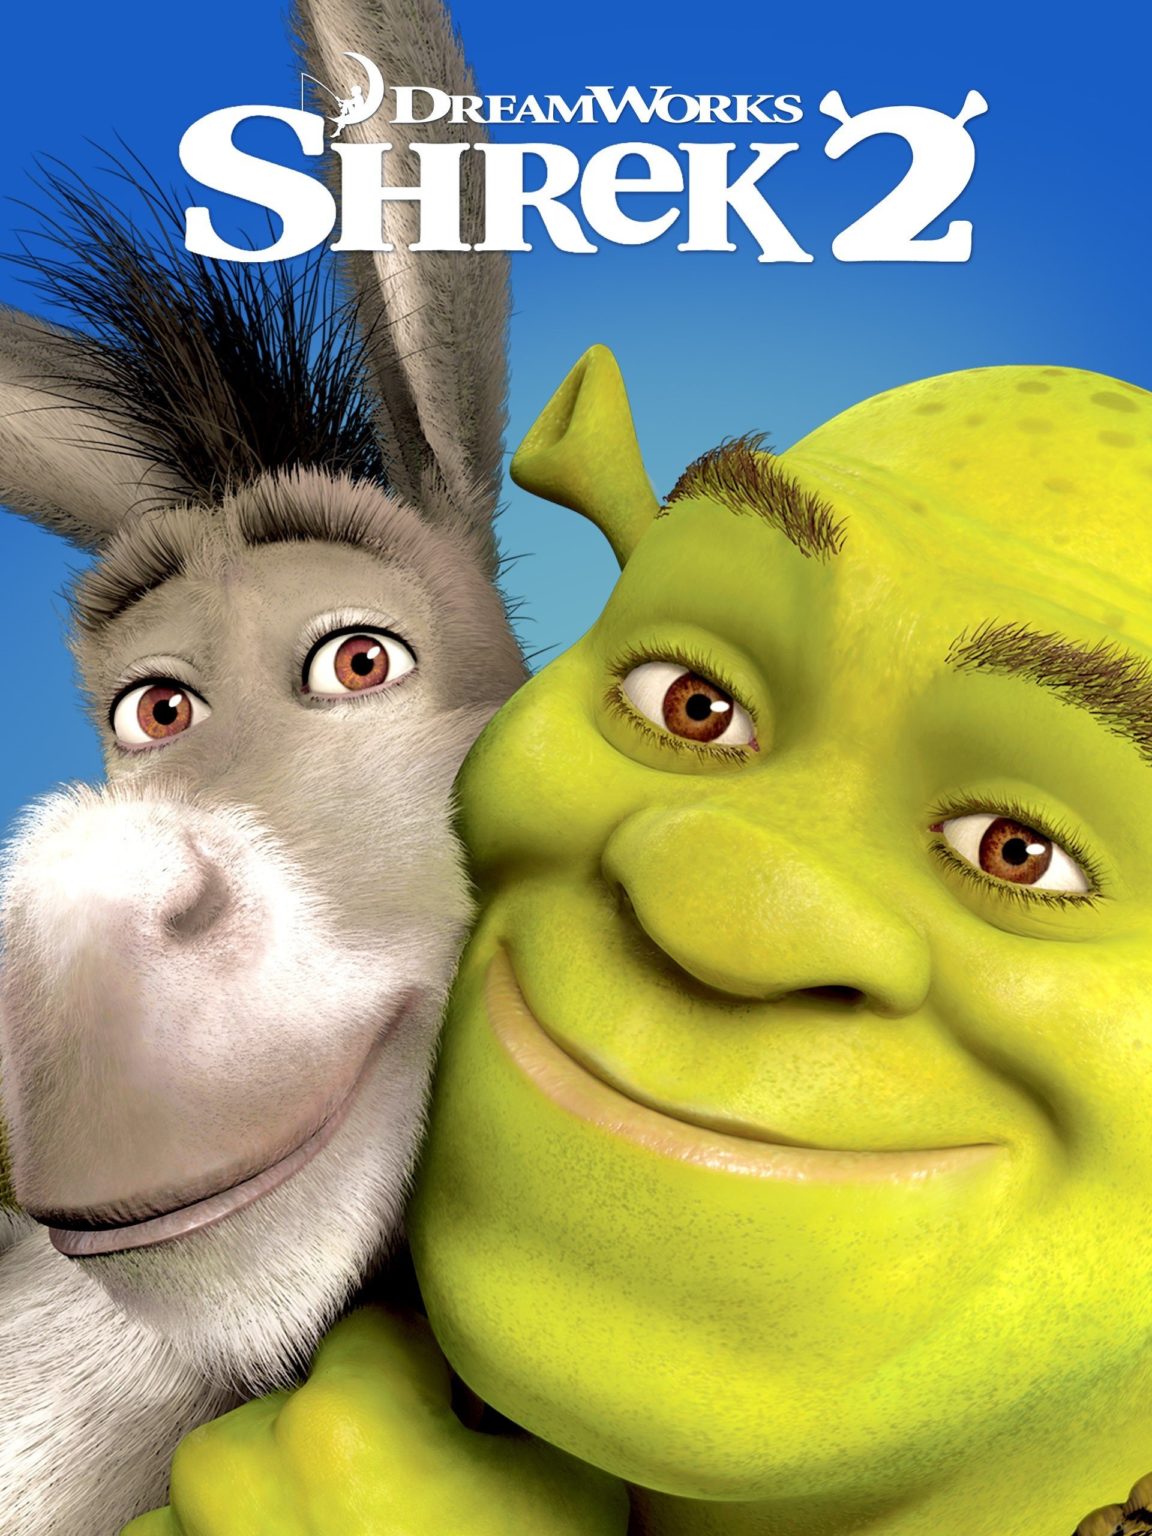 Shrek 2 download the new version for windows